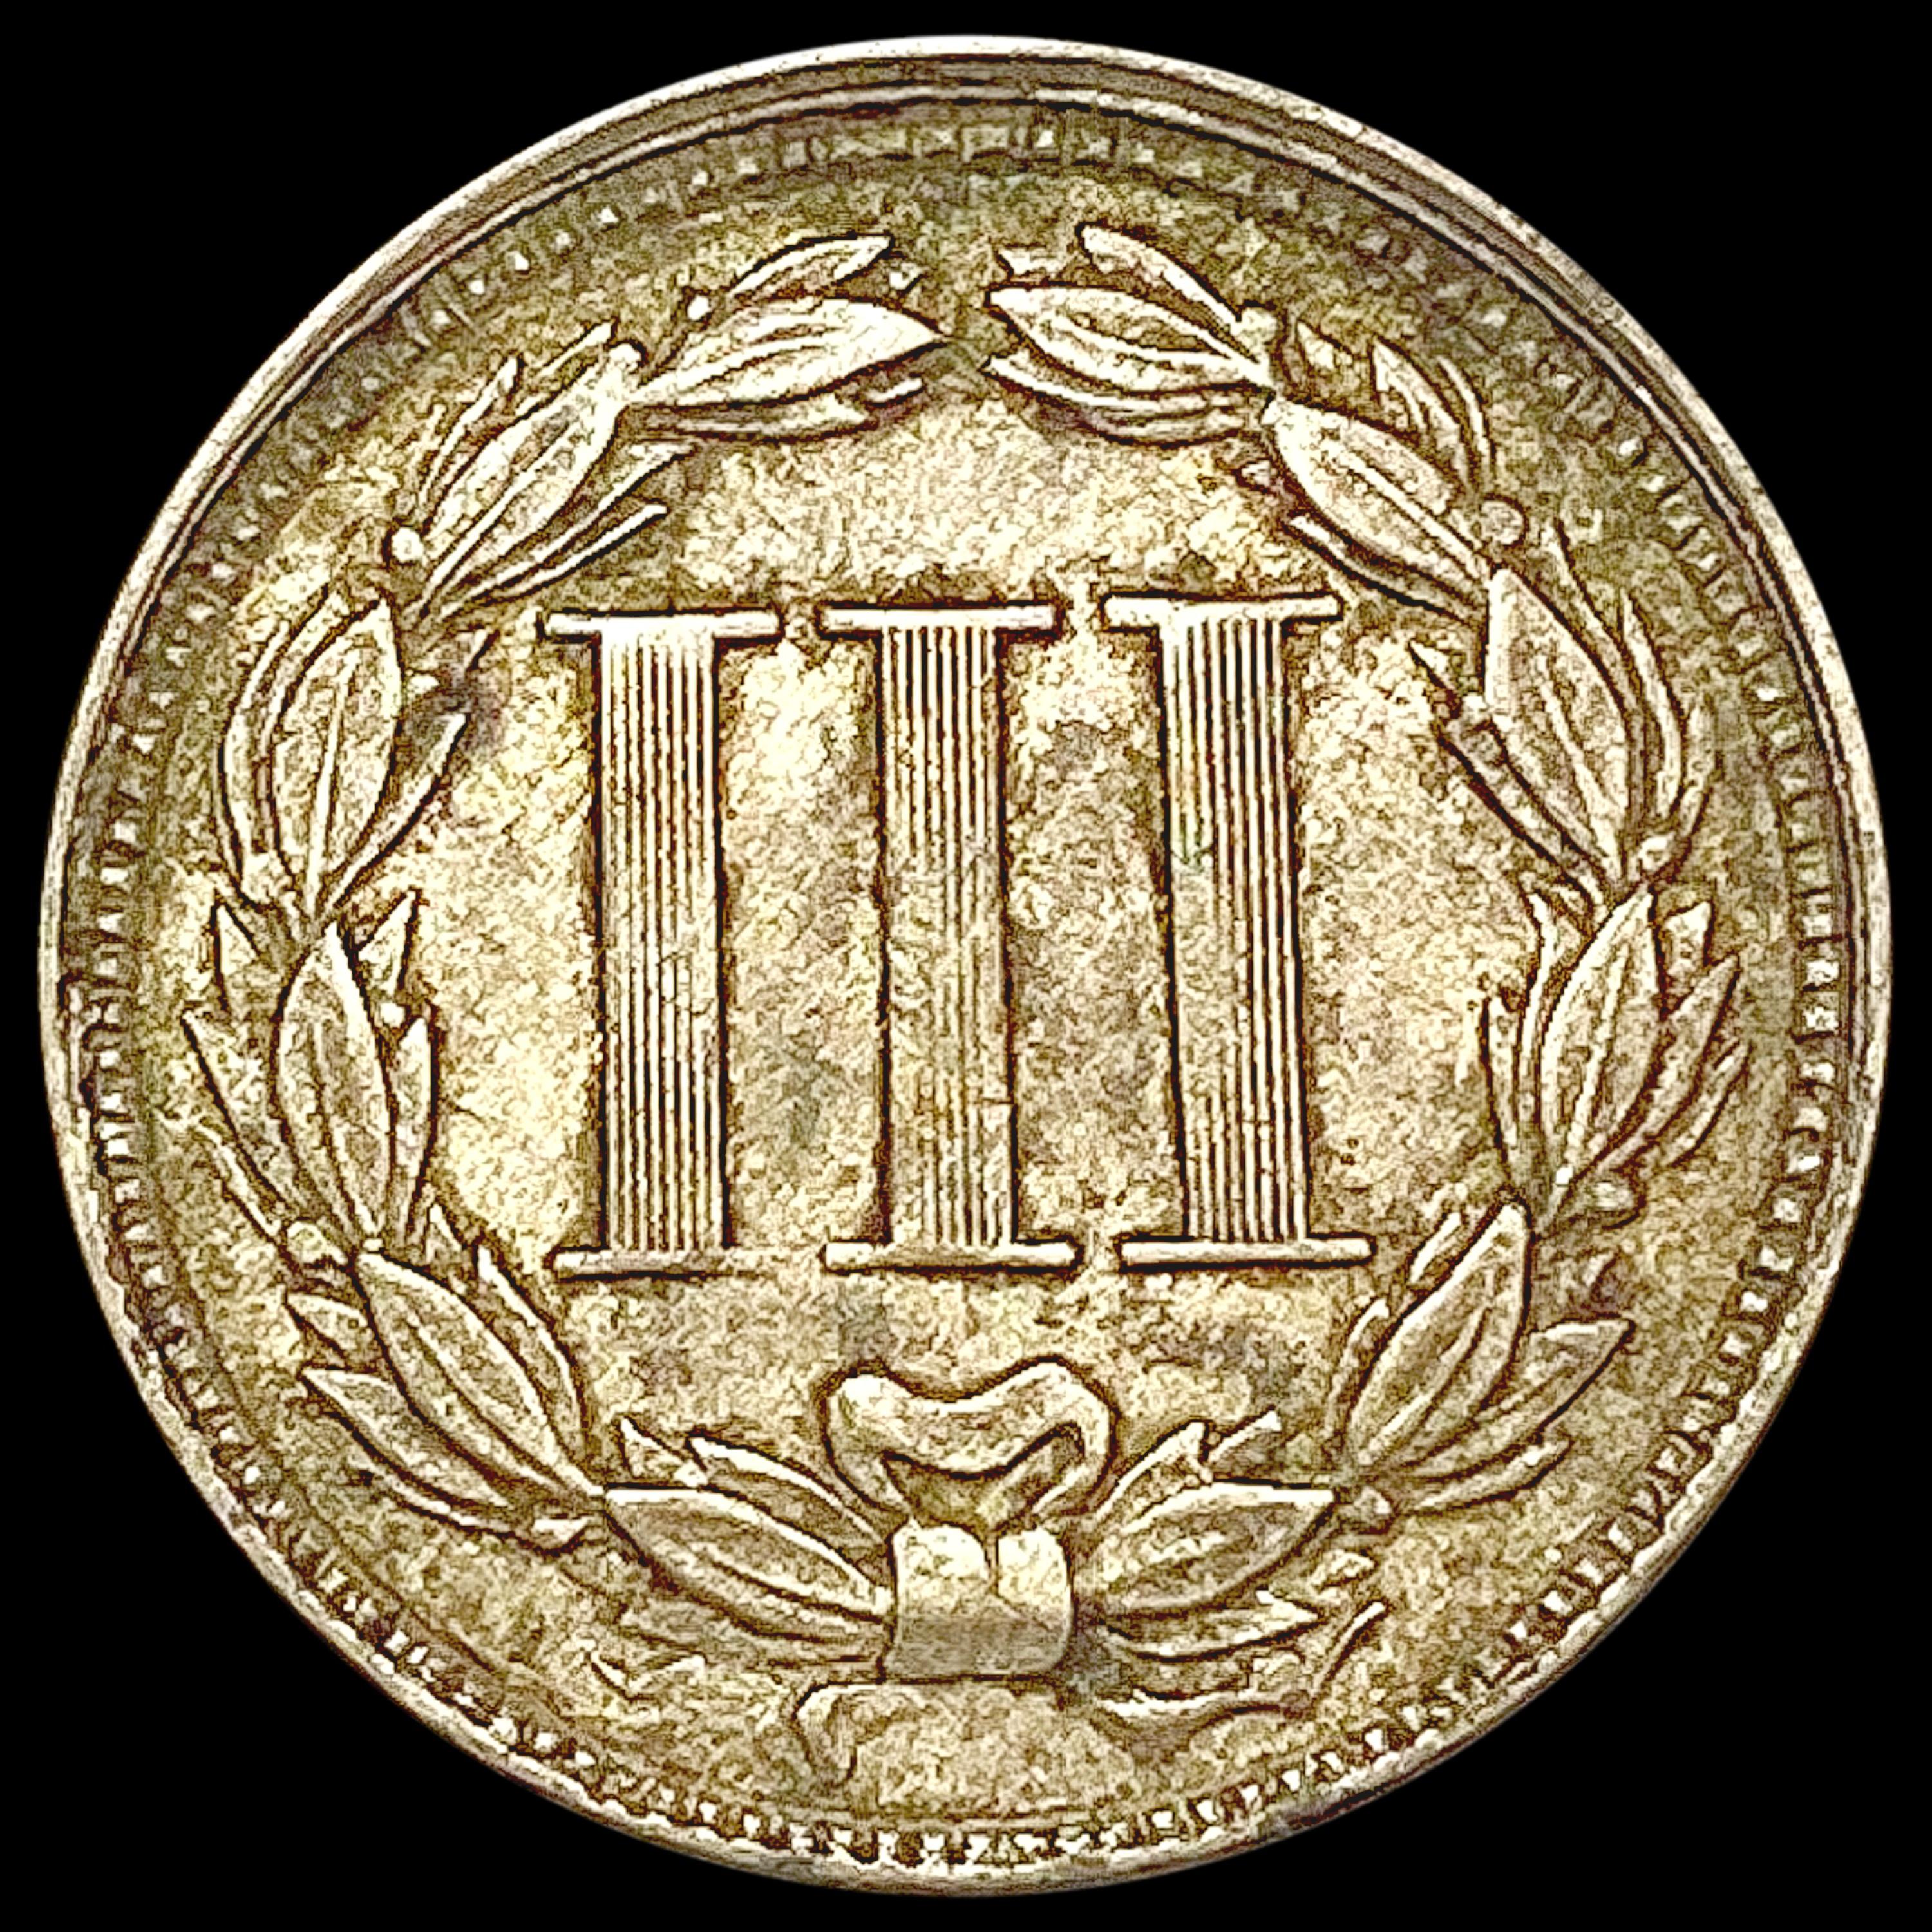 1866 Nickel Three Cent LIGHTLY CIRCULATED